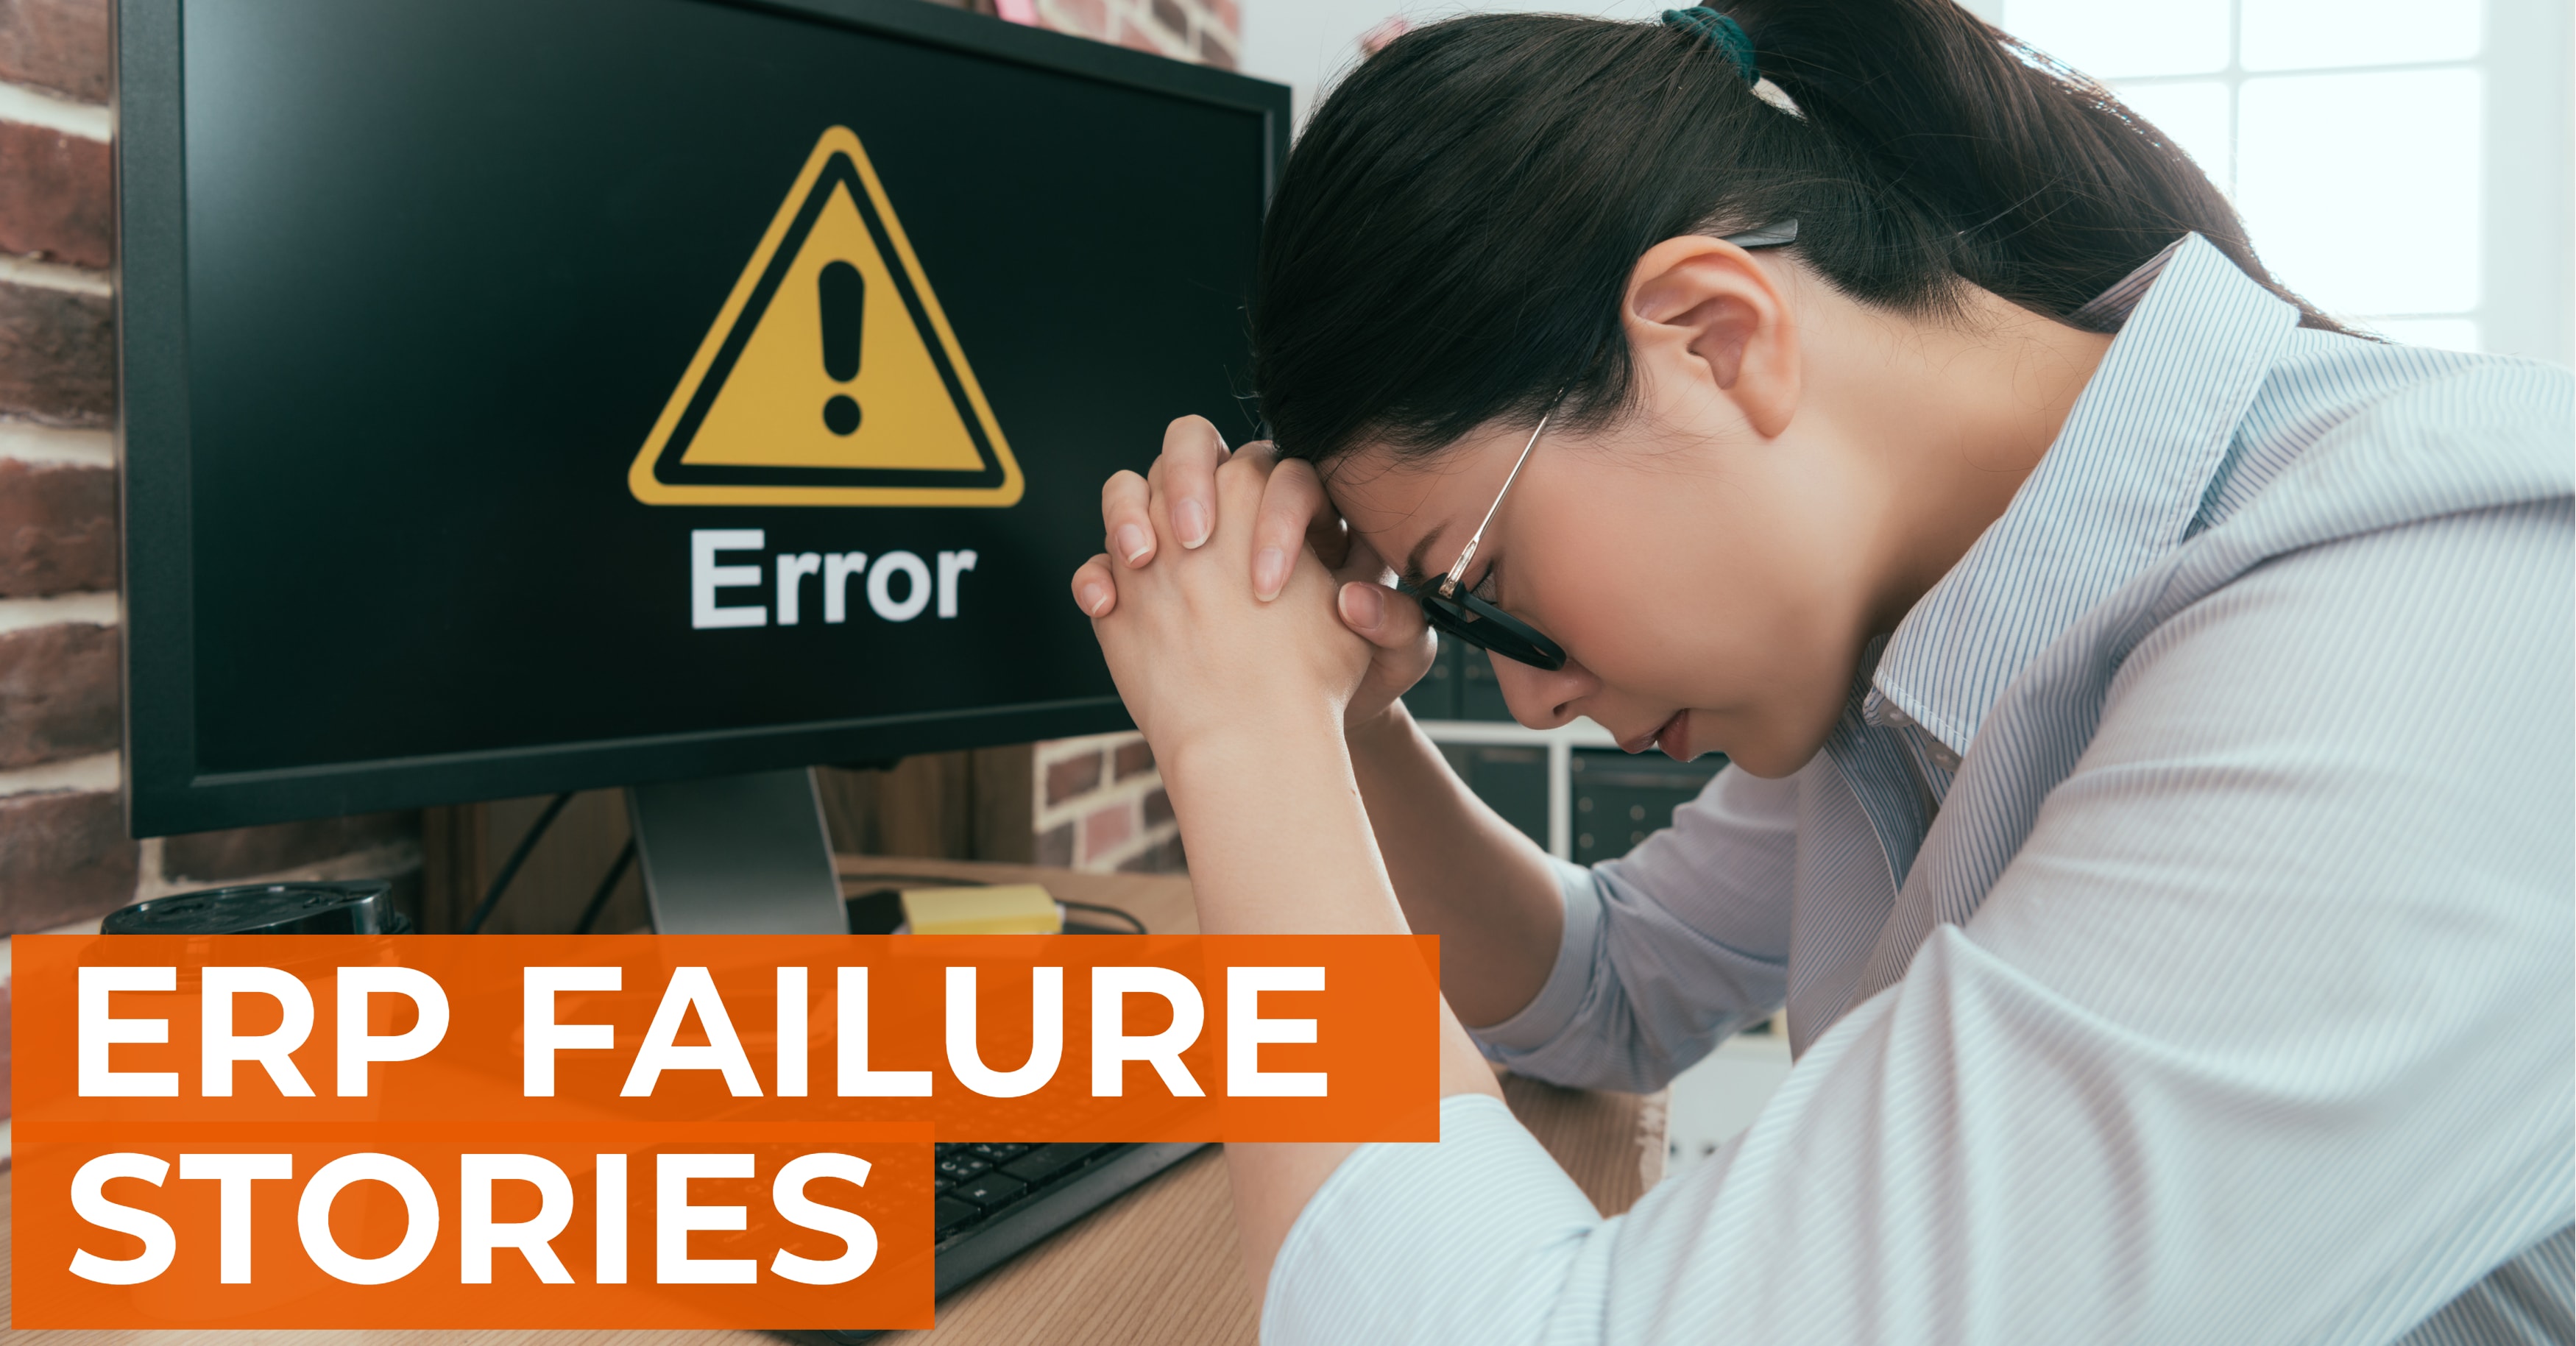 More ERP Failure Stories